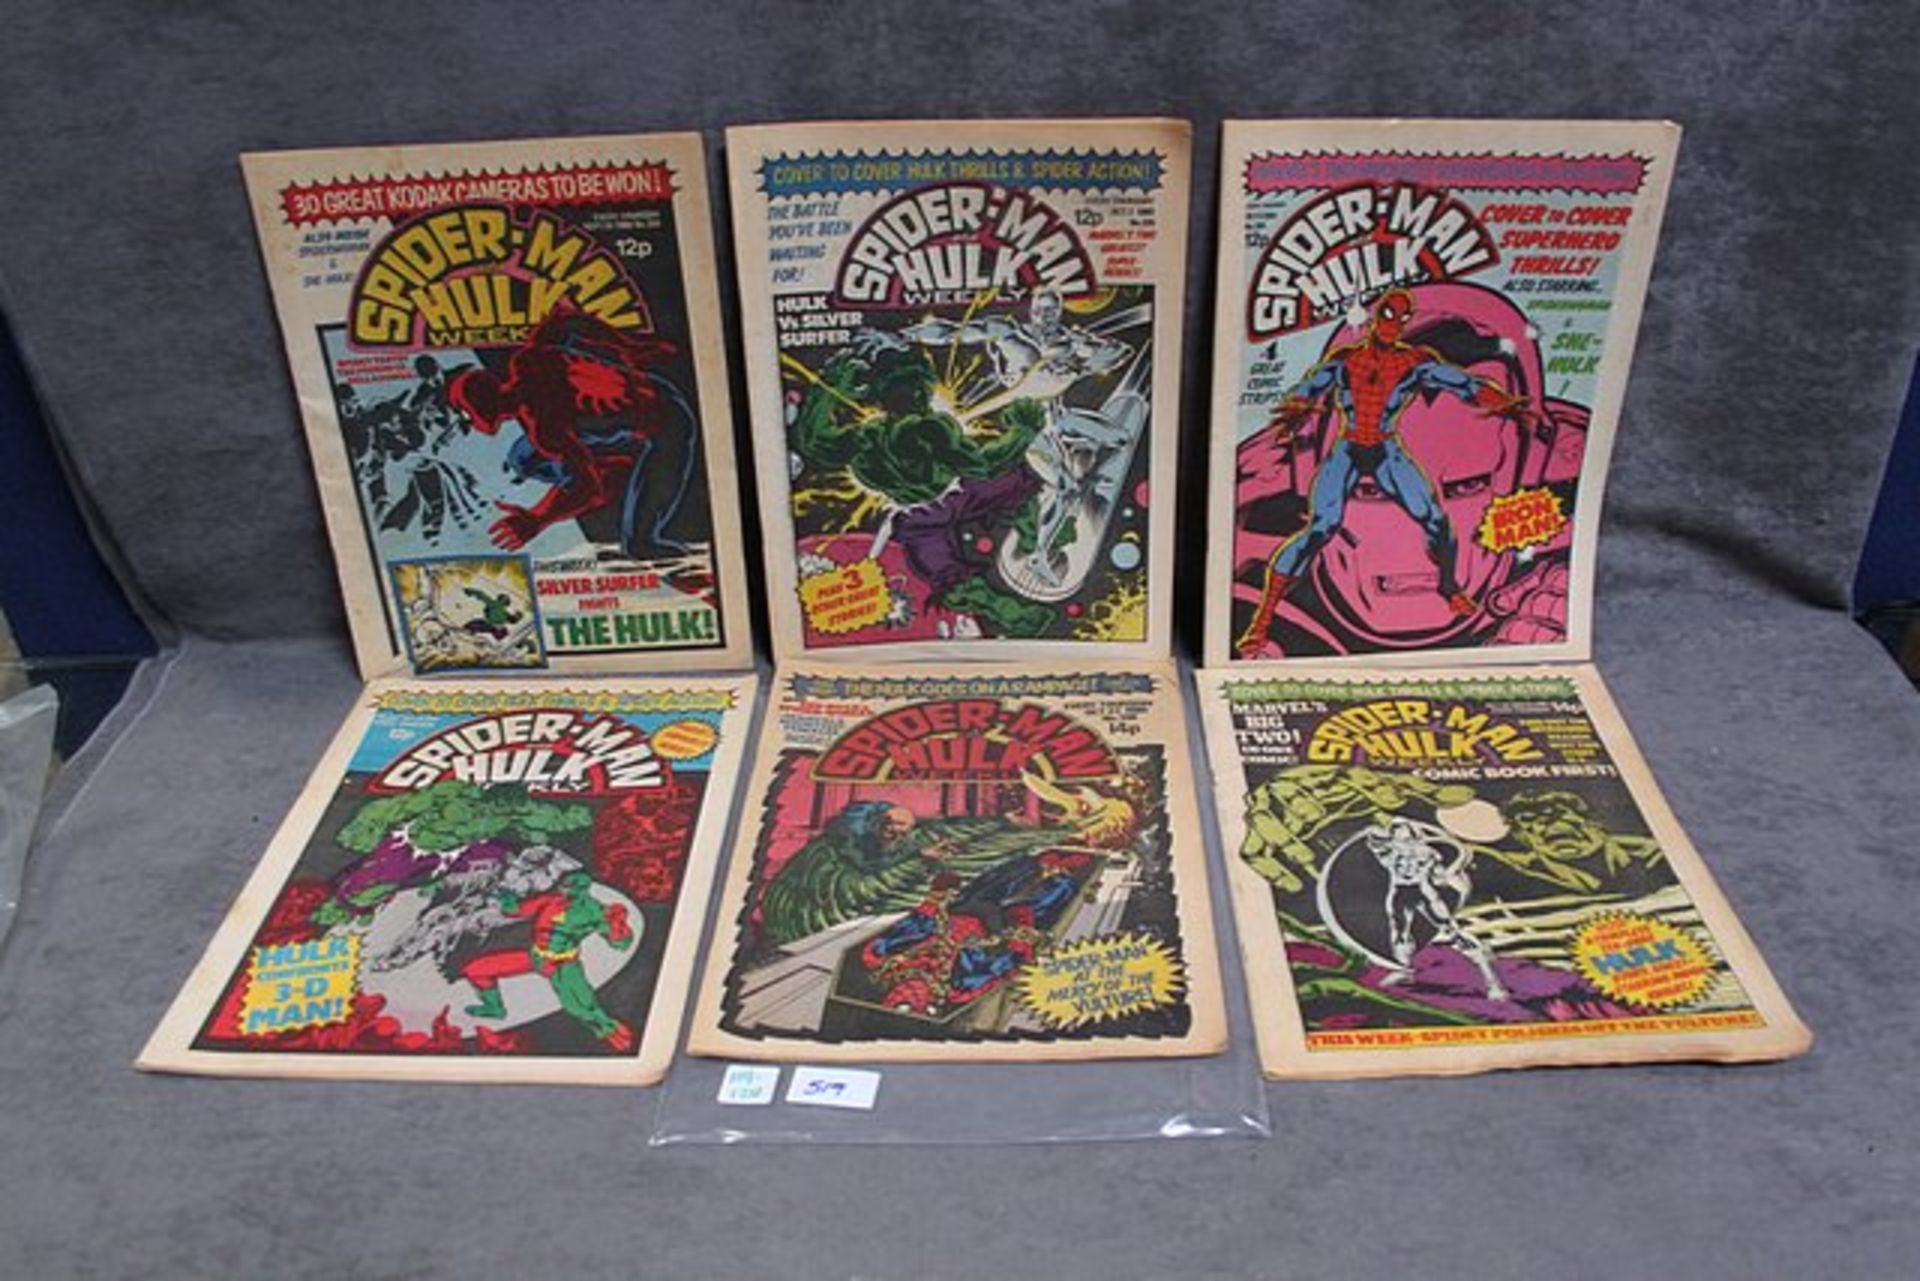 6 x Marvel Comics comprising Spider-Man & Hulk weekly No 394 Spider-Man & Hulk weekly No 395